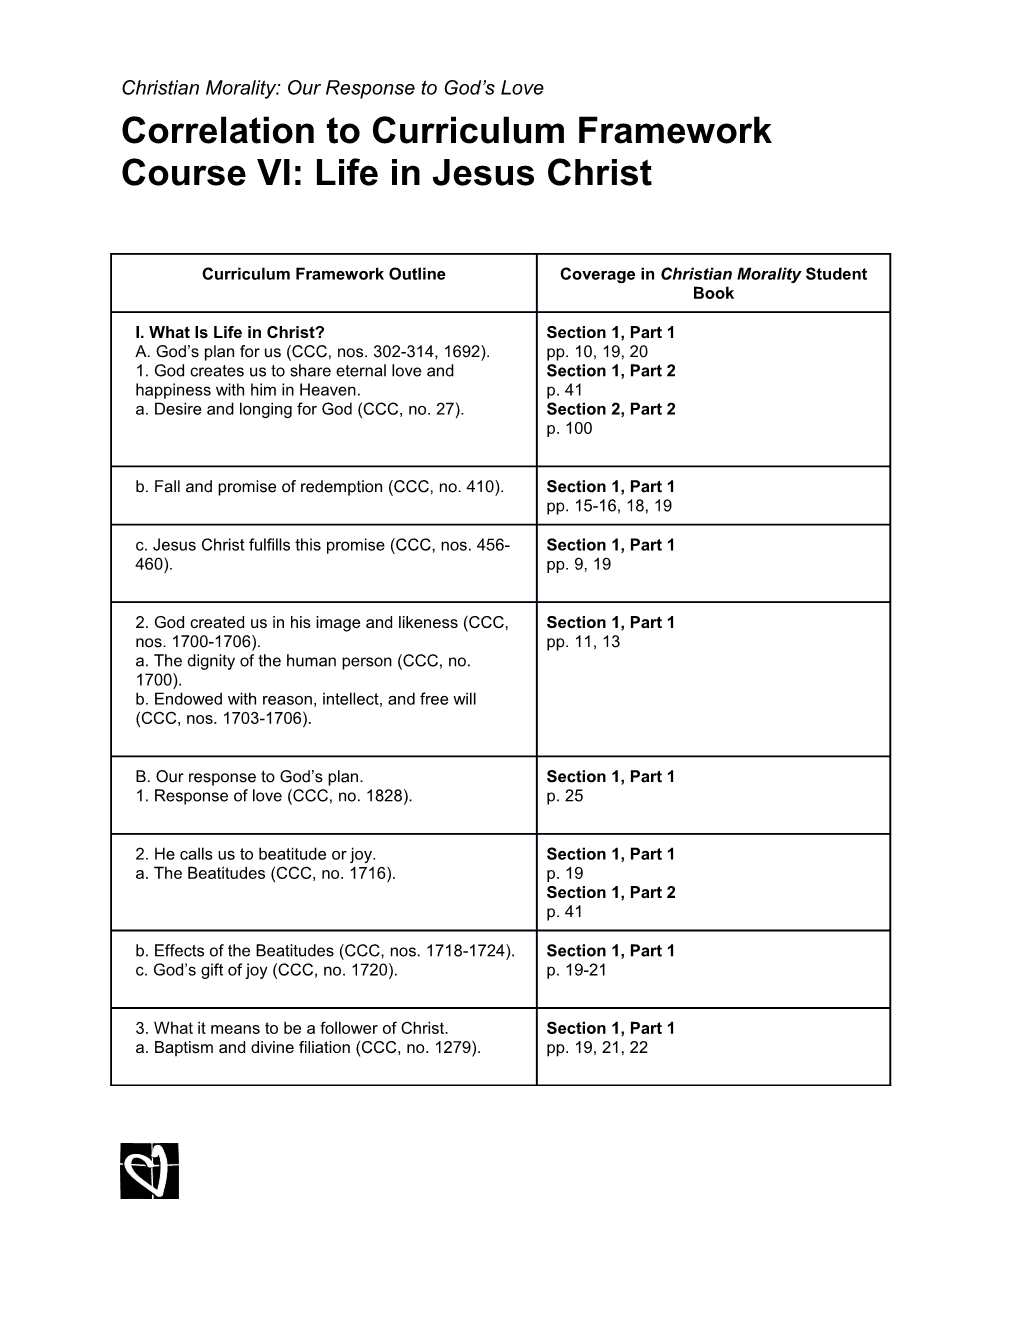 Correlation to Curriculum Framework Course VI: Life in Jesus Christ